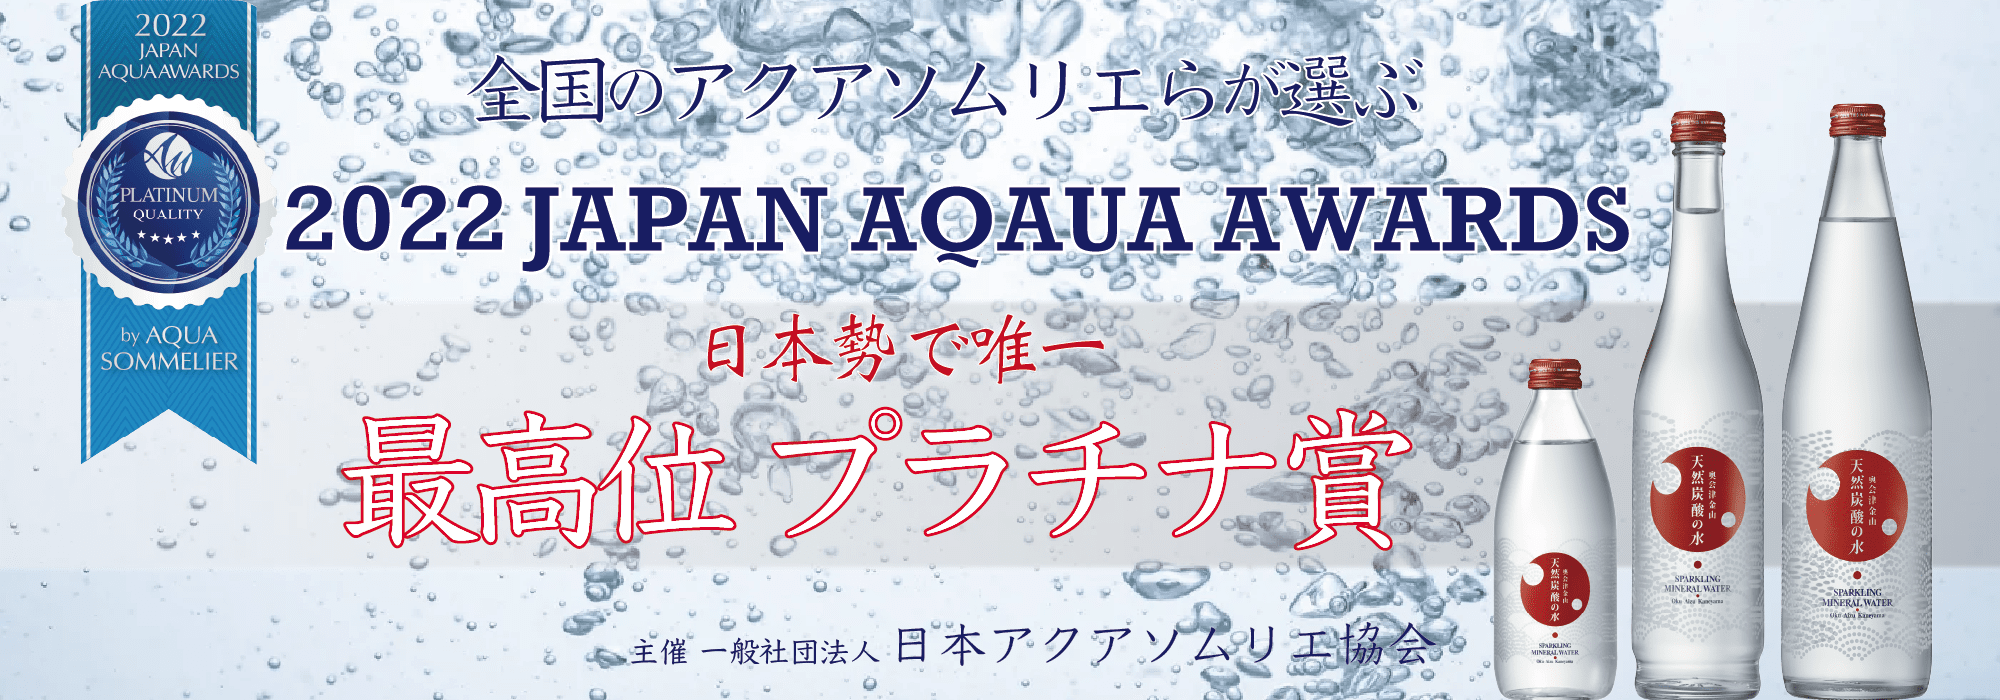 2022 JAPAN AQUA AWARDS受賞